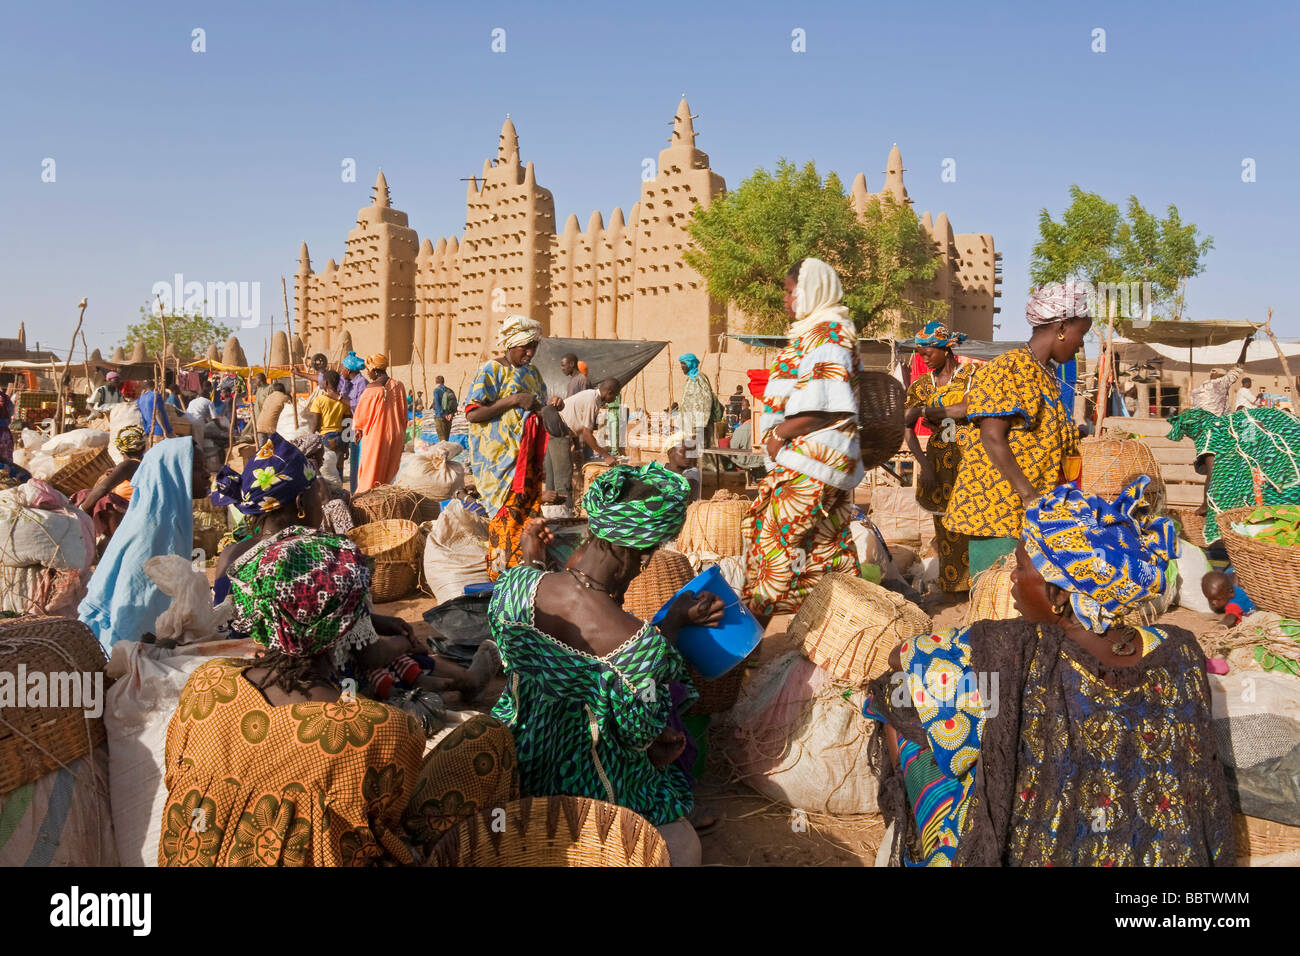 Great Mosque of Djenne, Djenne, Mopti Region, Niger Inland Delta, Mali, West Africa Stock Photo